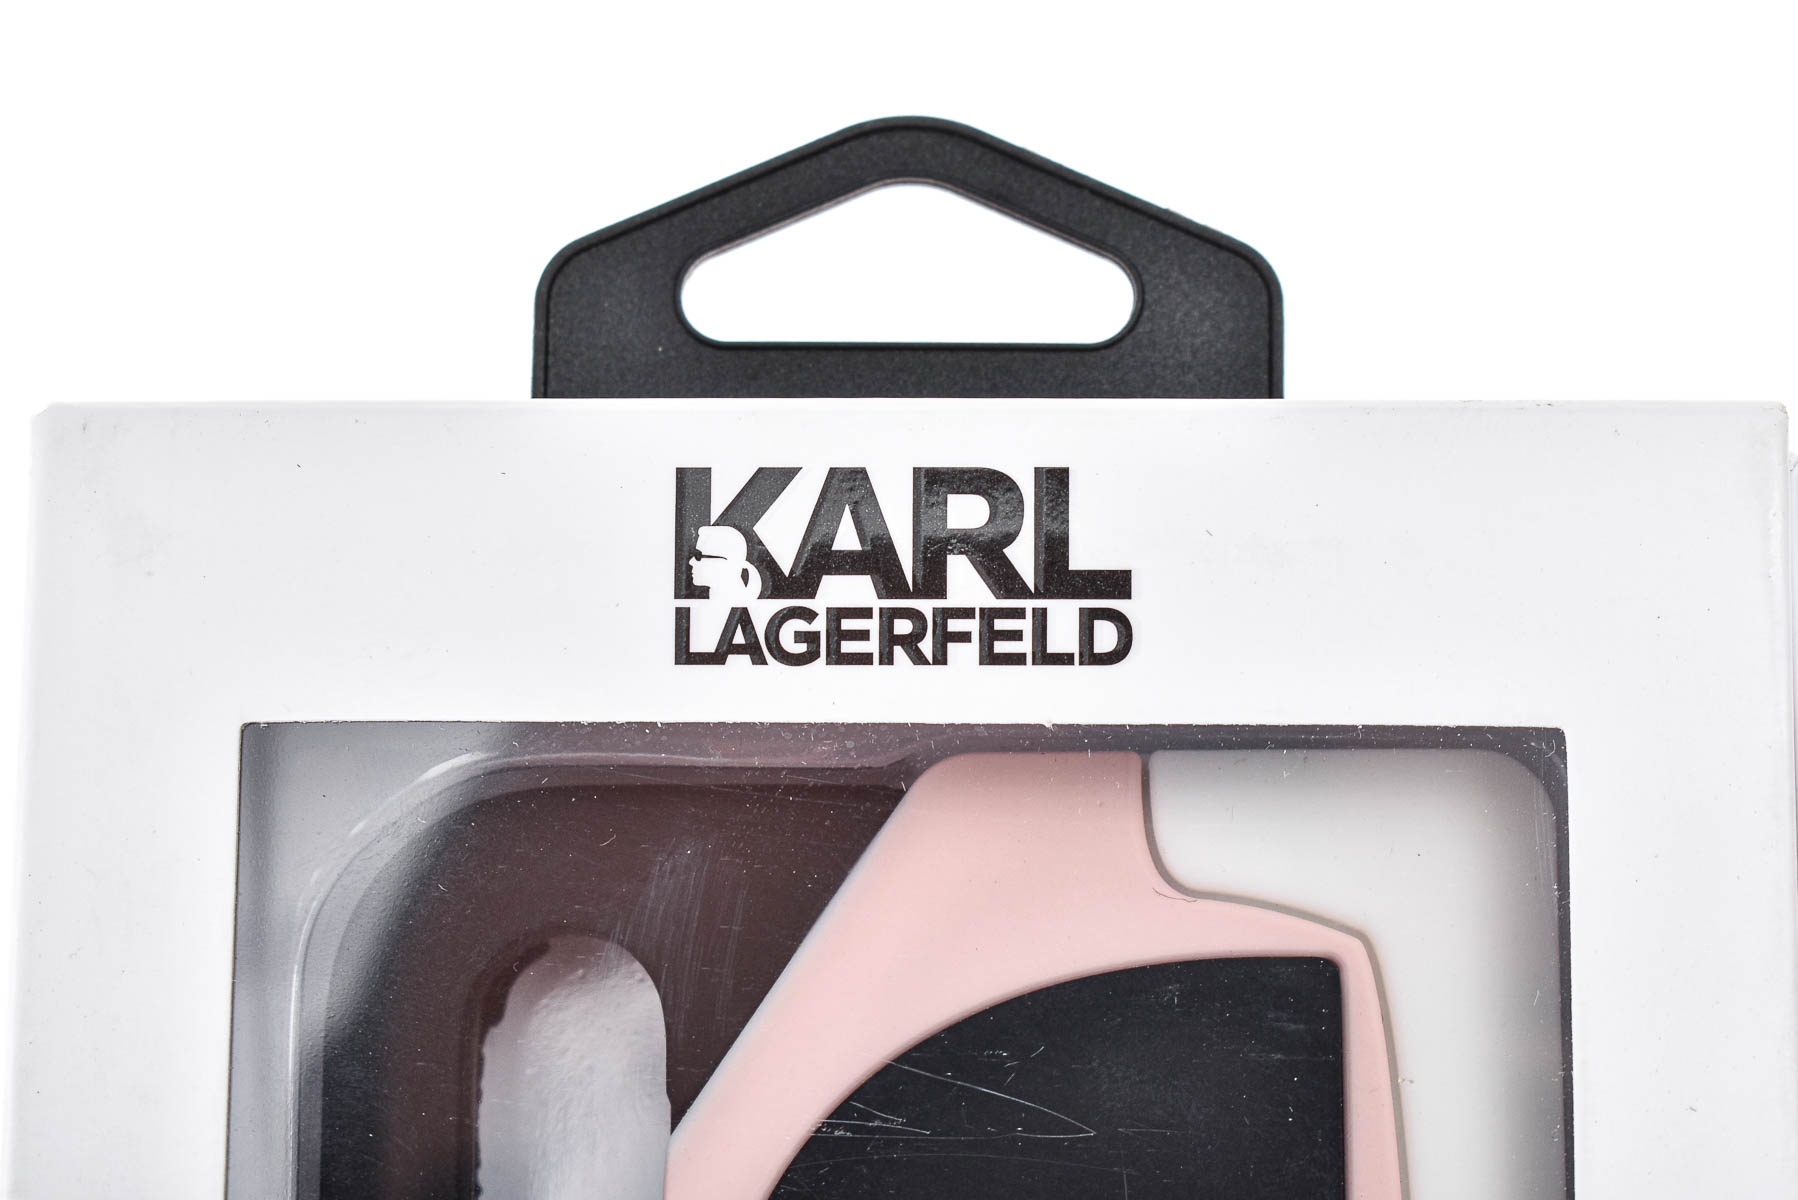 Phone case - iPhone X / XS Max - Karl Lagerfeld - 2